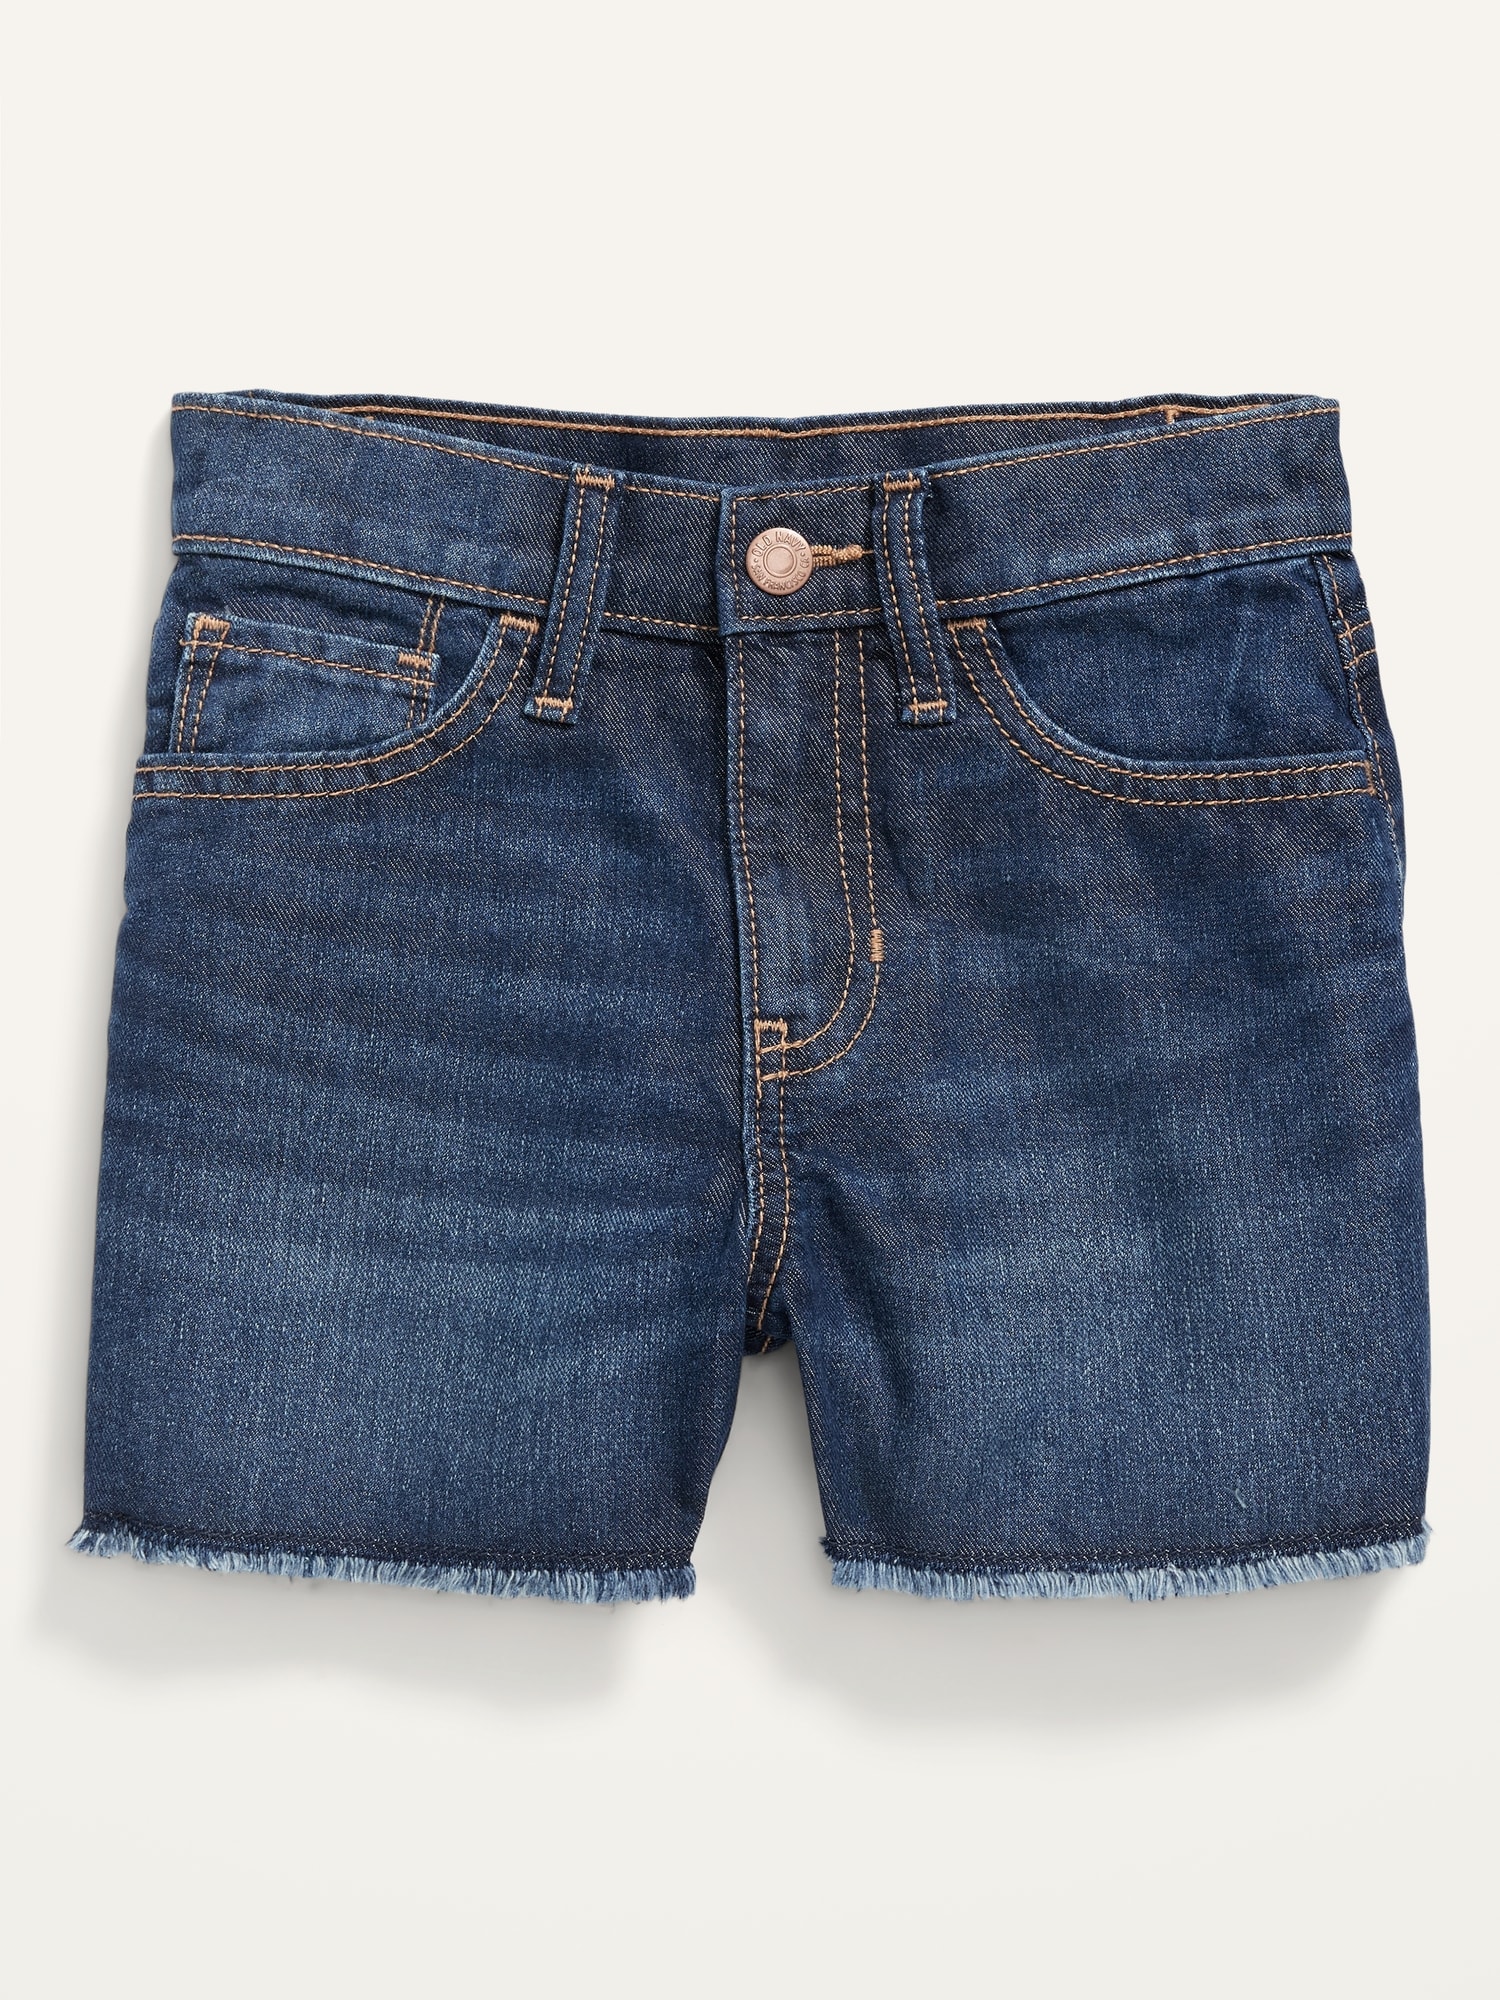 Tassle Denim Shorts - Light Vintage Wash